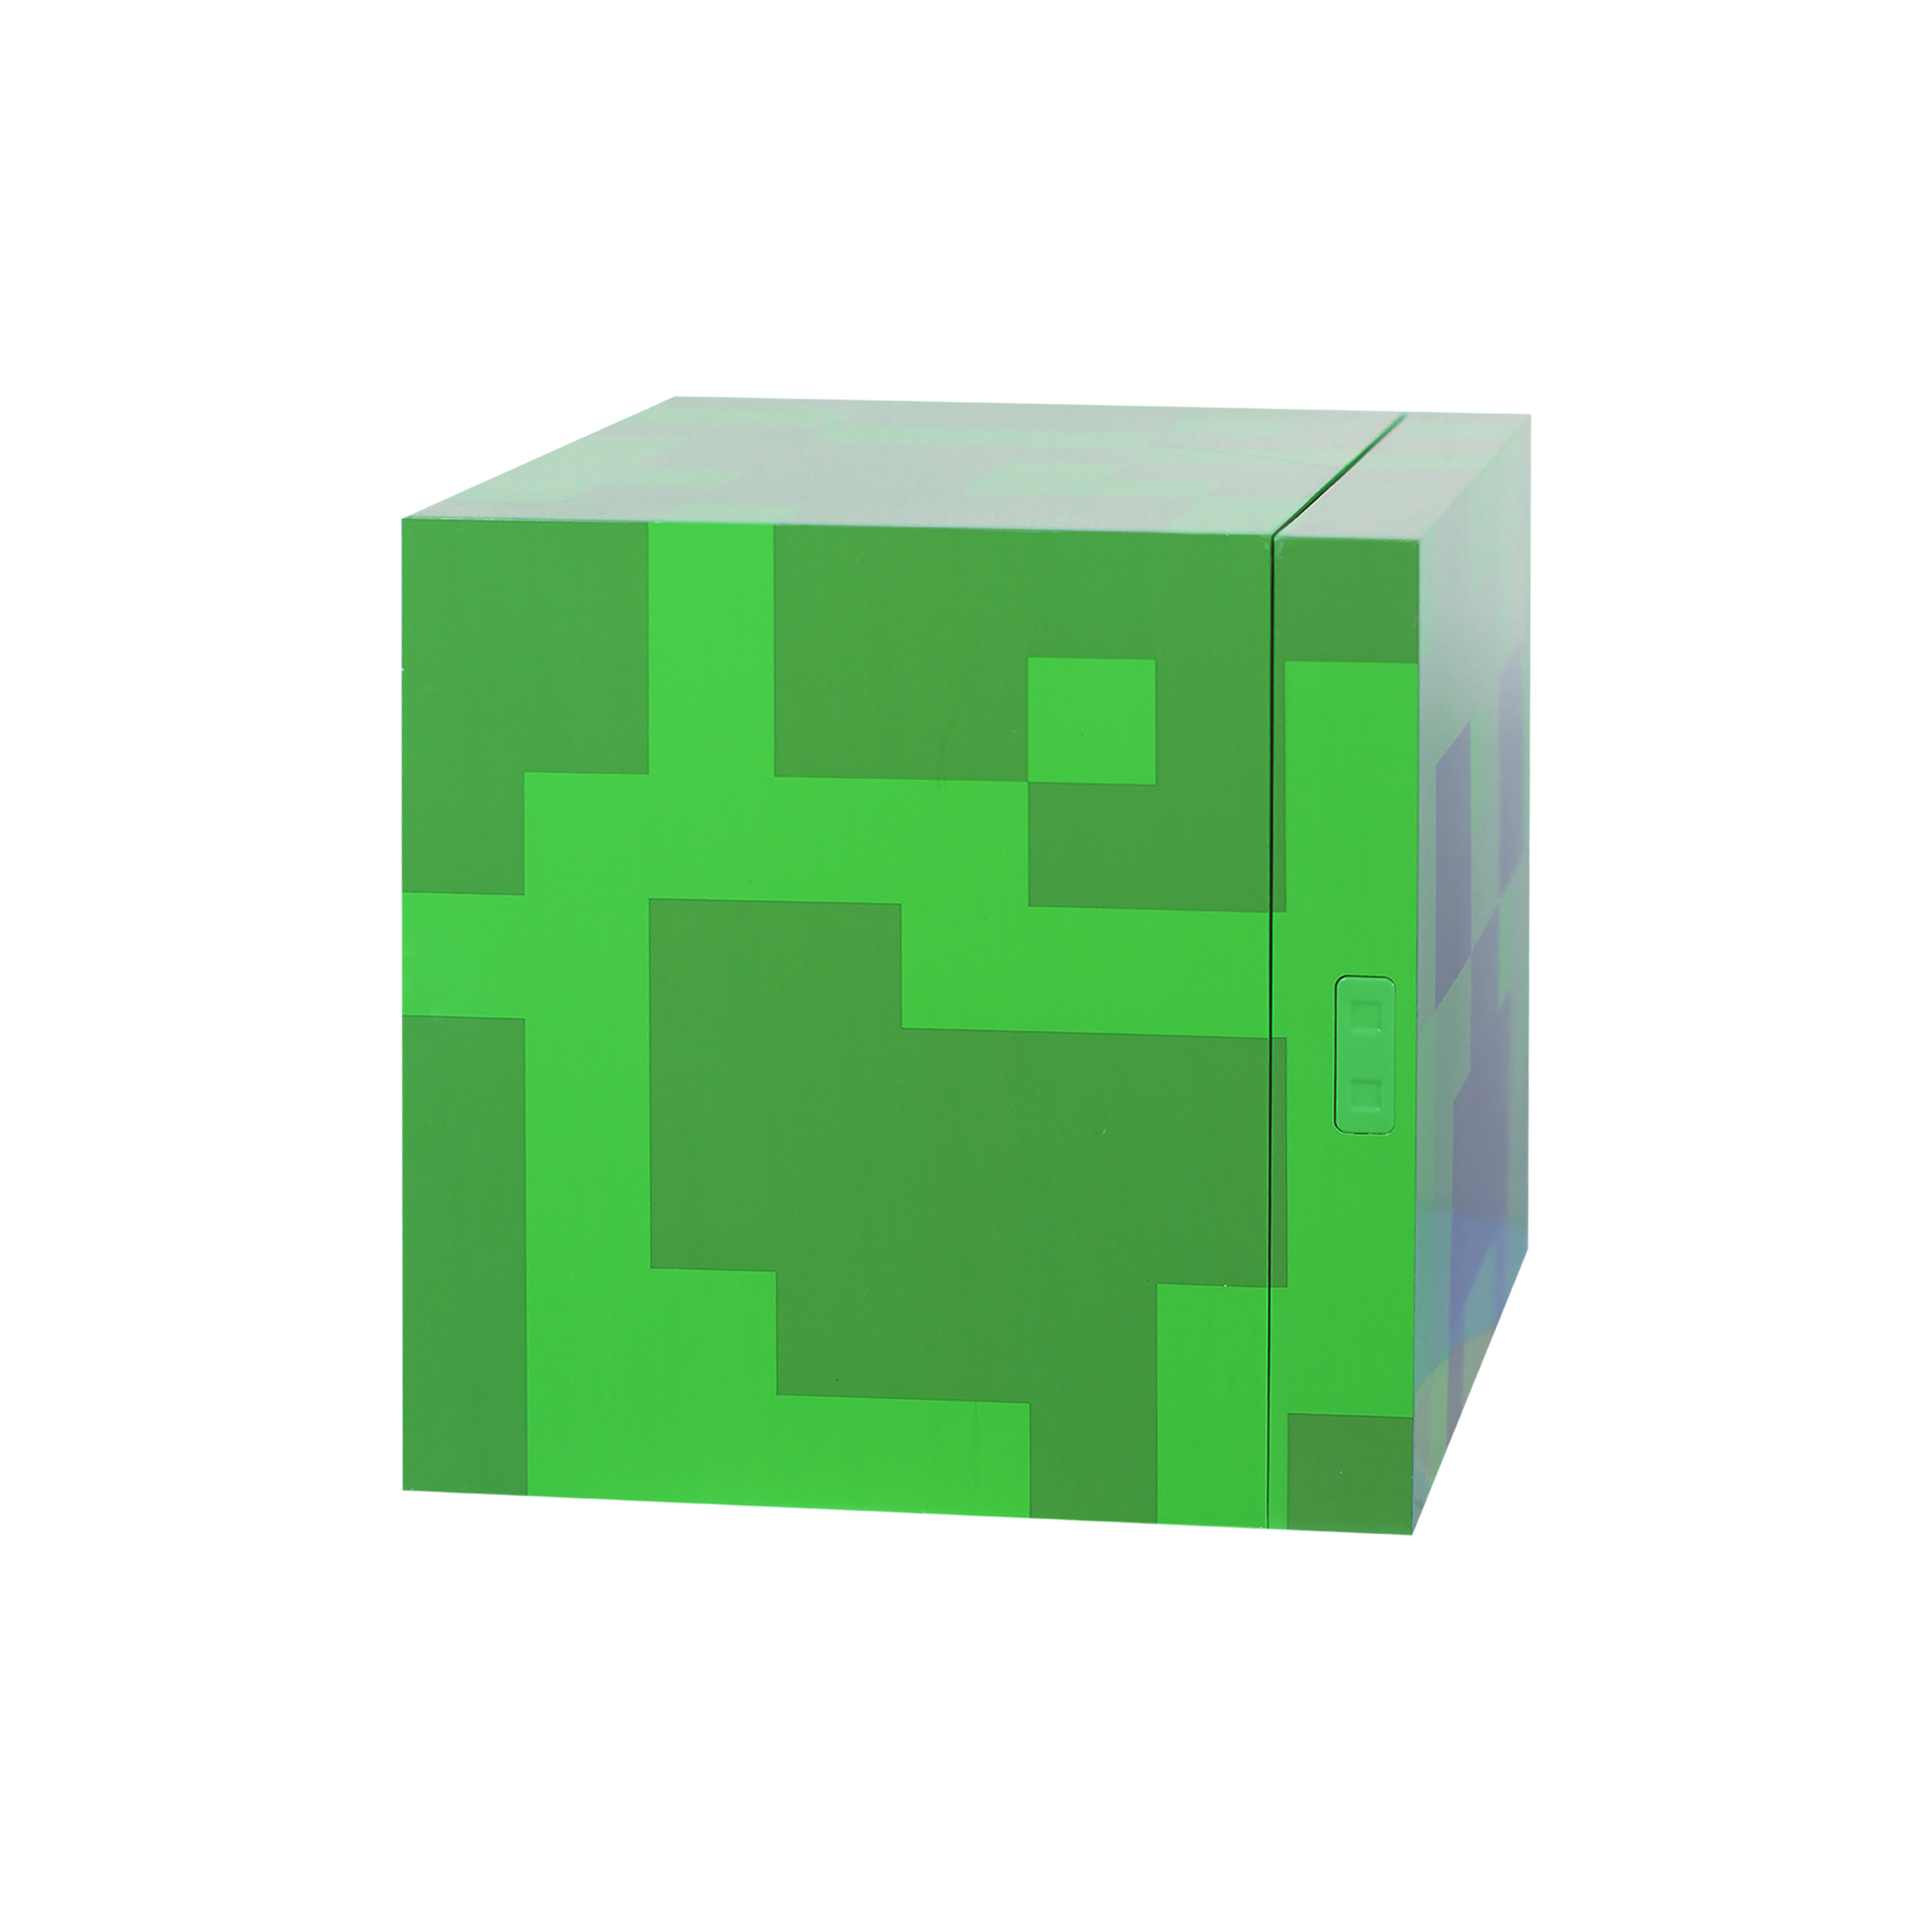 Creeper-fridge : r/Minecraft